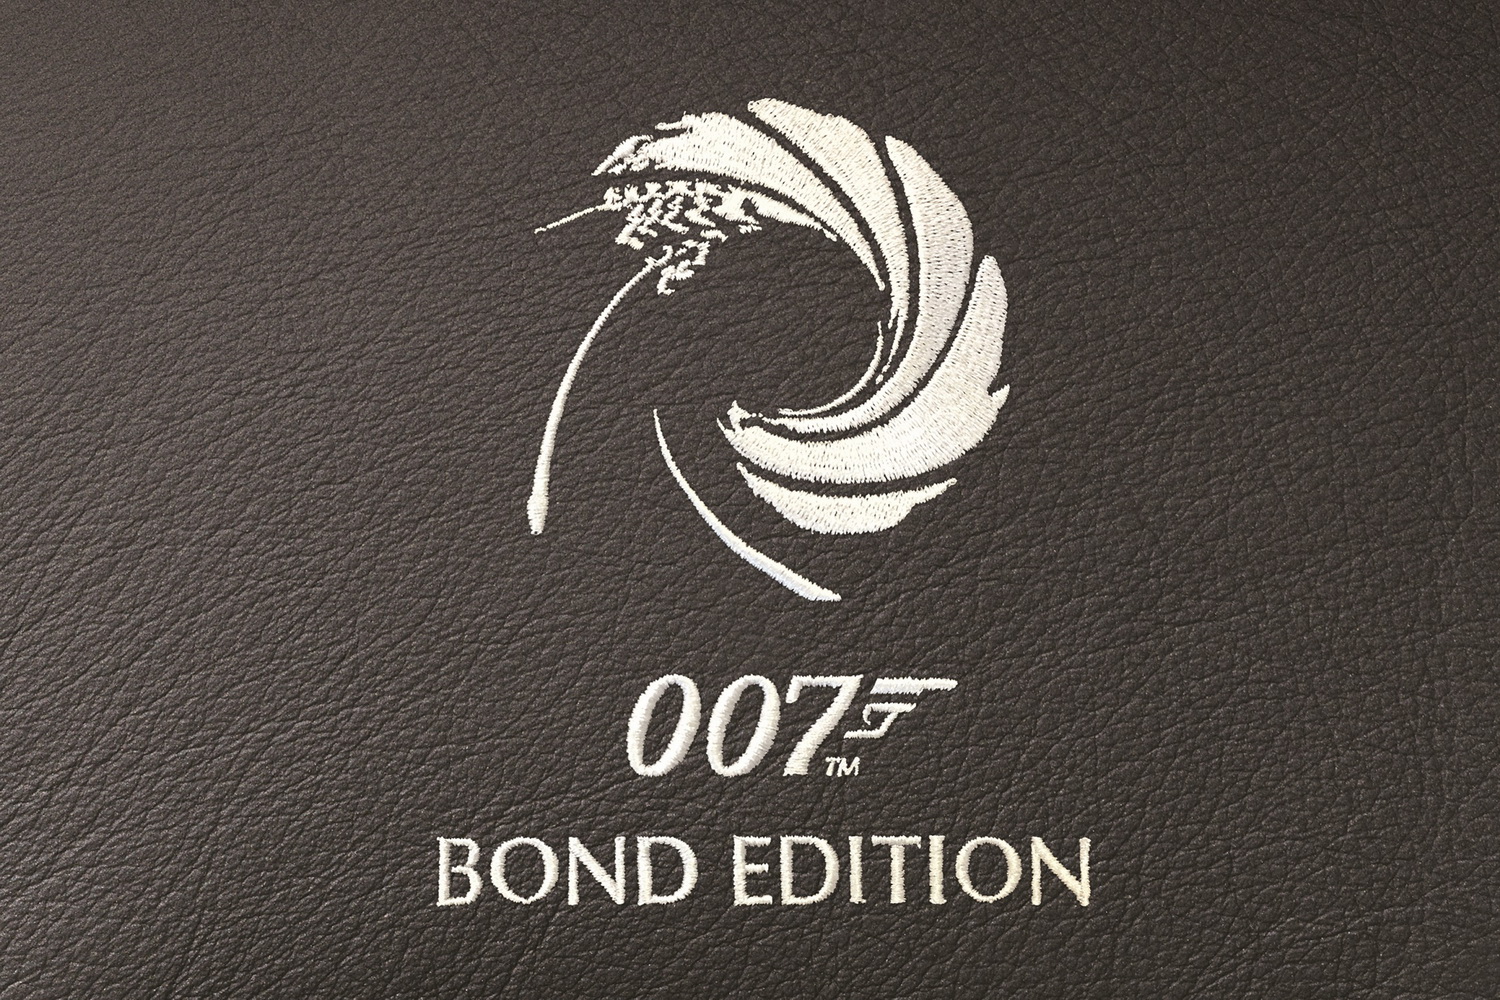 DB9 GT Bond Edition stitch